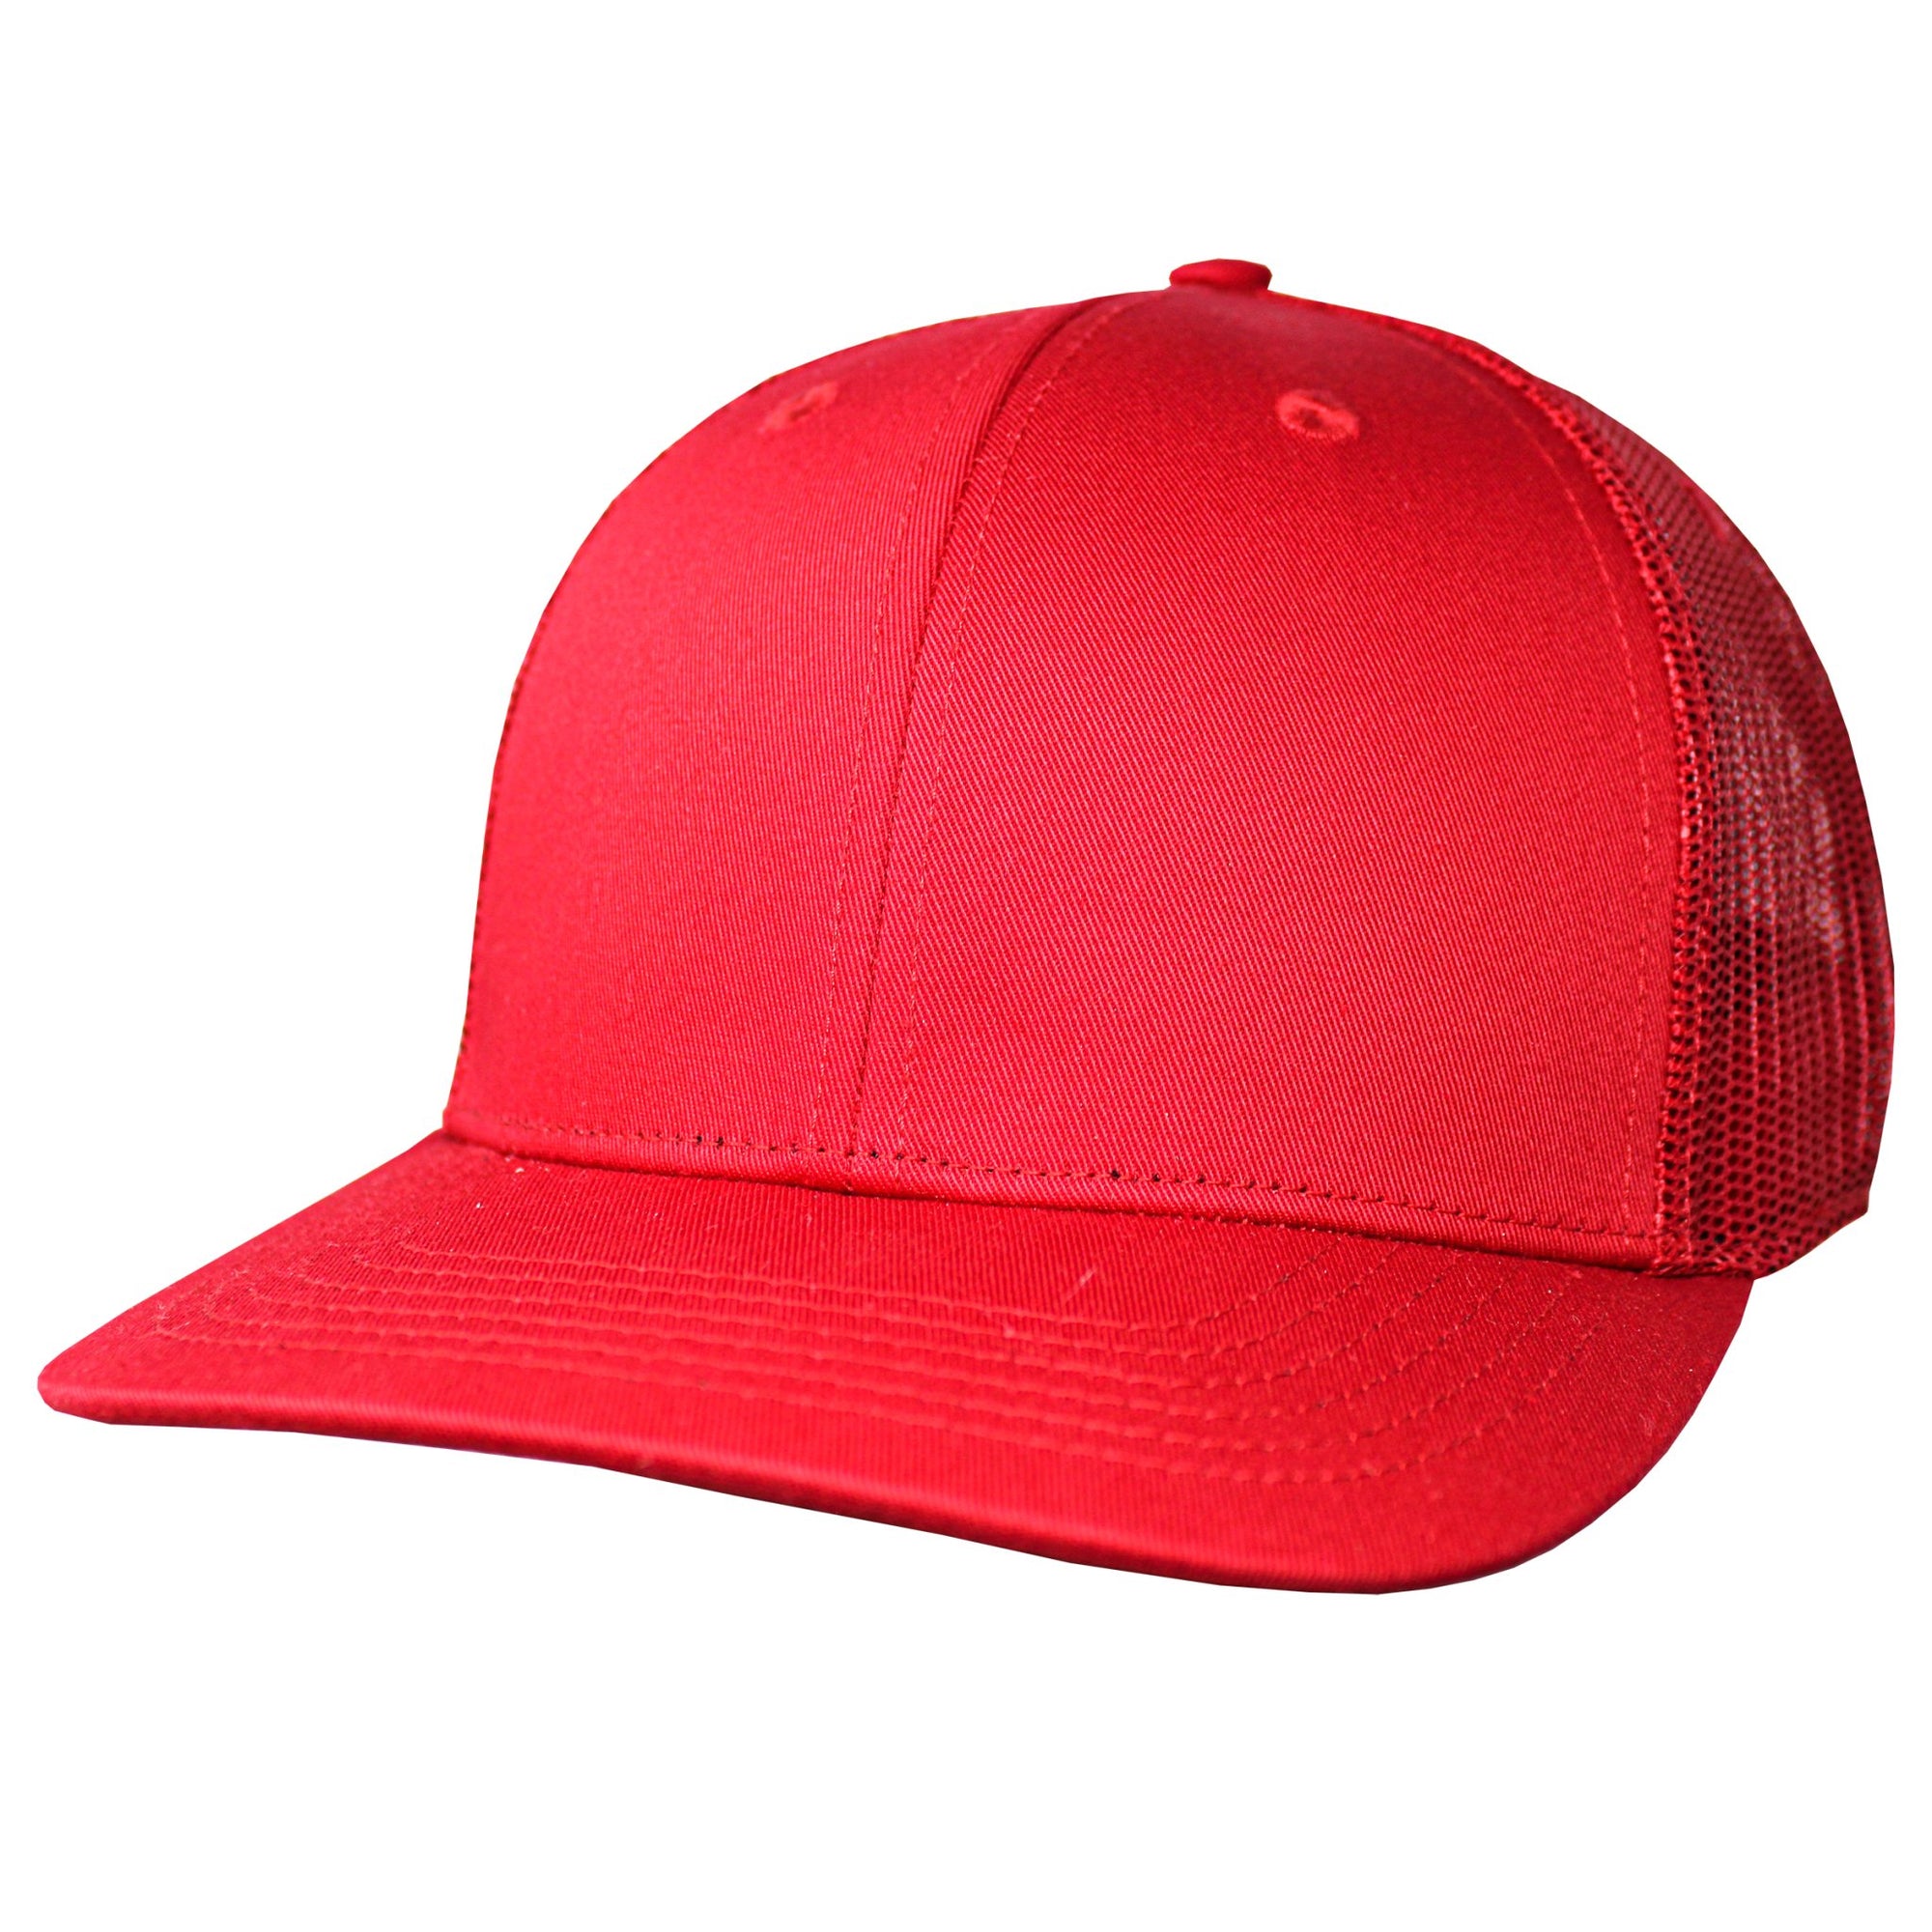 Blank Headwear - BC23 / 6 Panel Performance Trucker Cap - Red / Red - Black Cat MFG - Hat